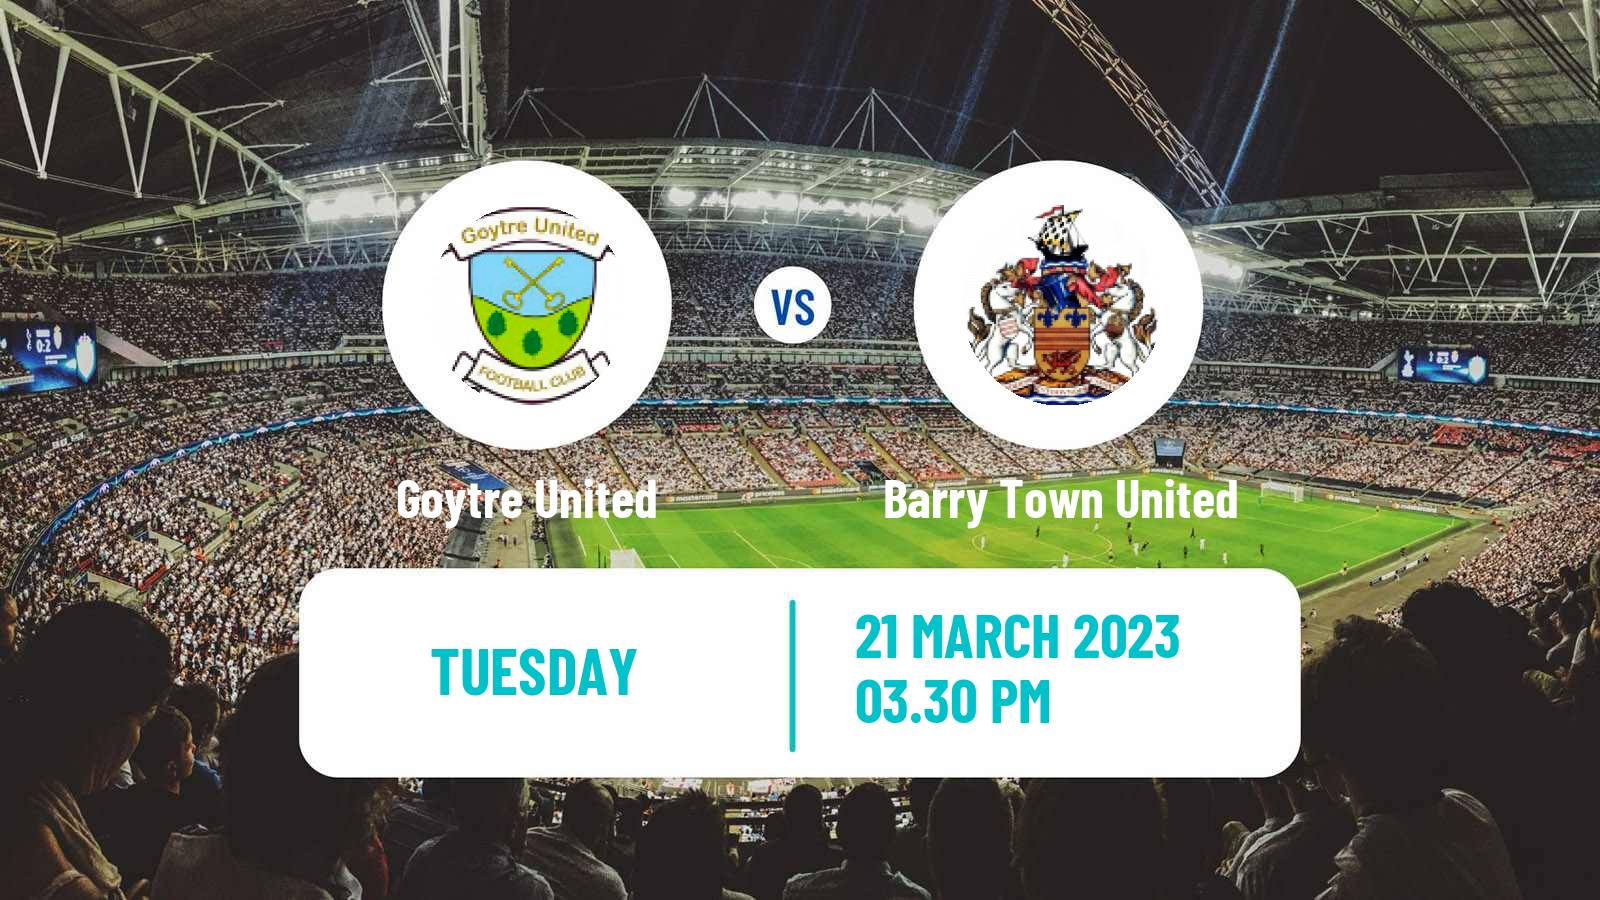 Soccer Welsh Cymru South Goytre United - Barry Town United